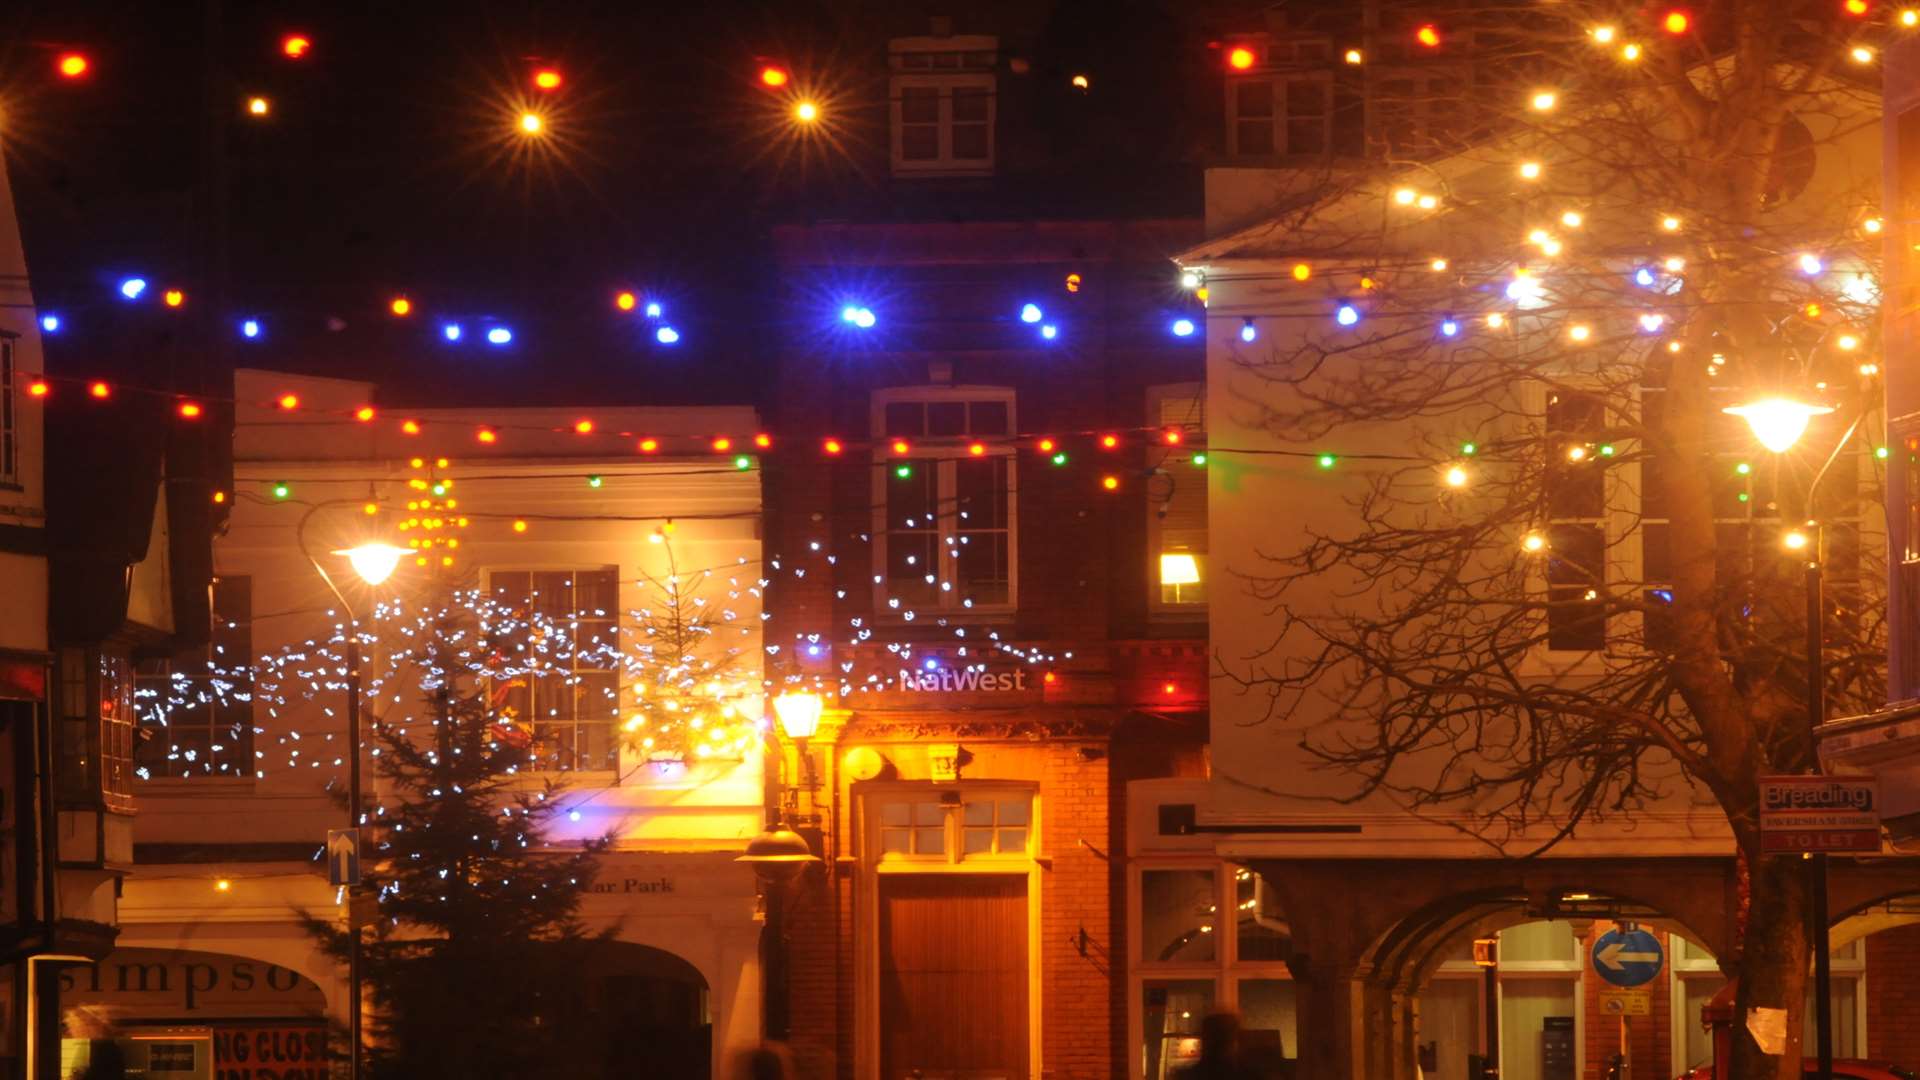 Lights in Faversham town centre